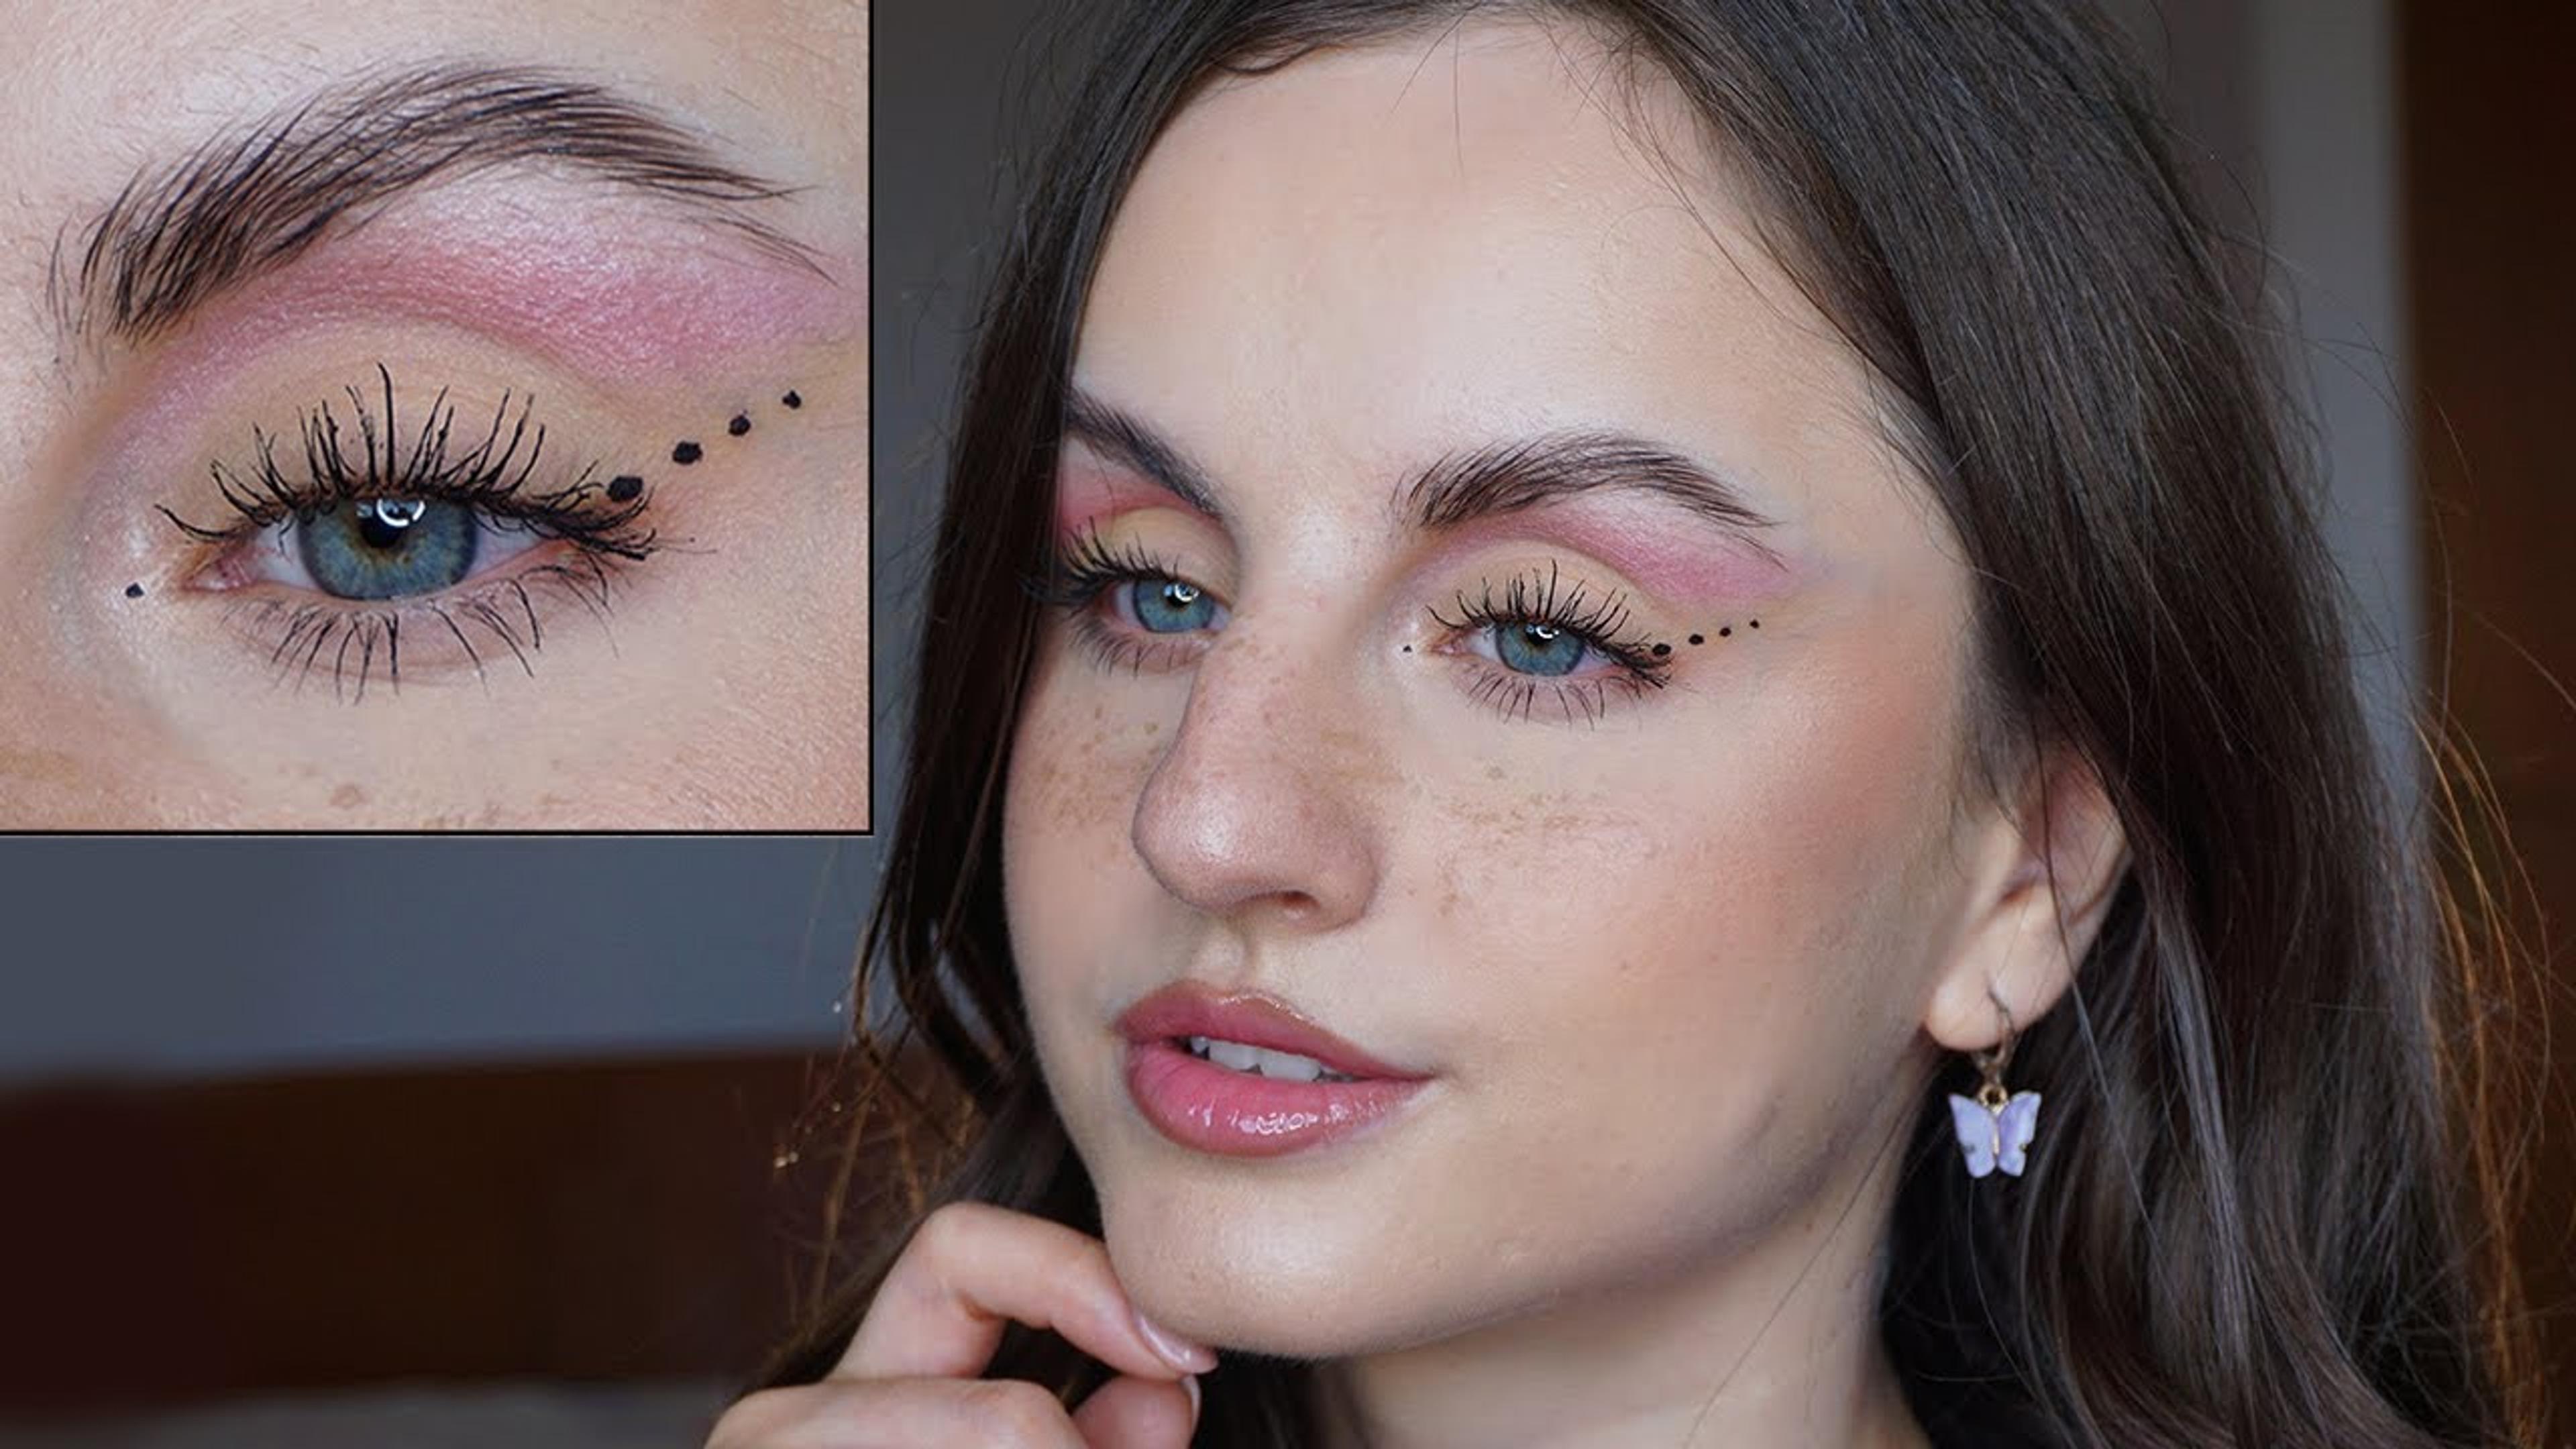 fun summer makeup with a twist 🌞 | beginner friendly makeup tutorial - YouTube